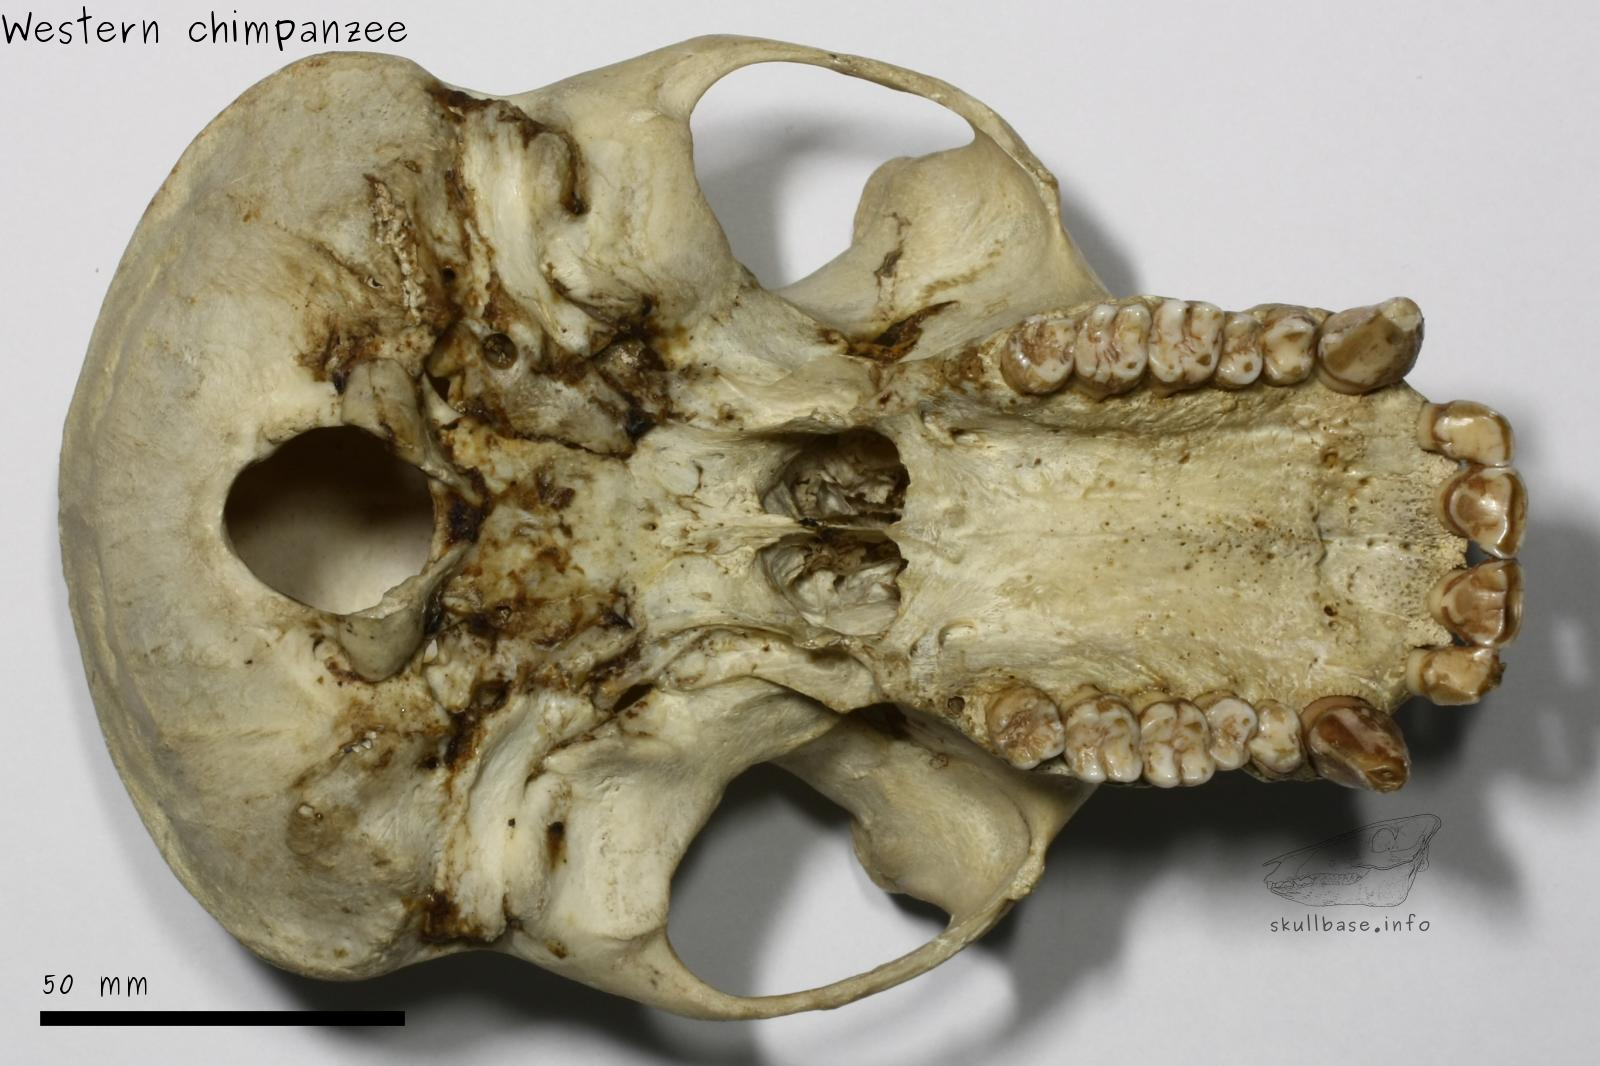 Western chimpanzee (Pan troglodytes verus) skull ventral view